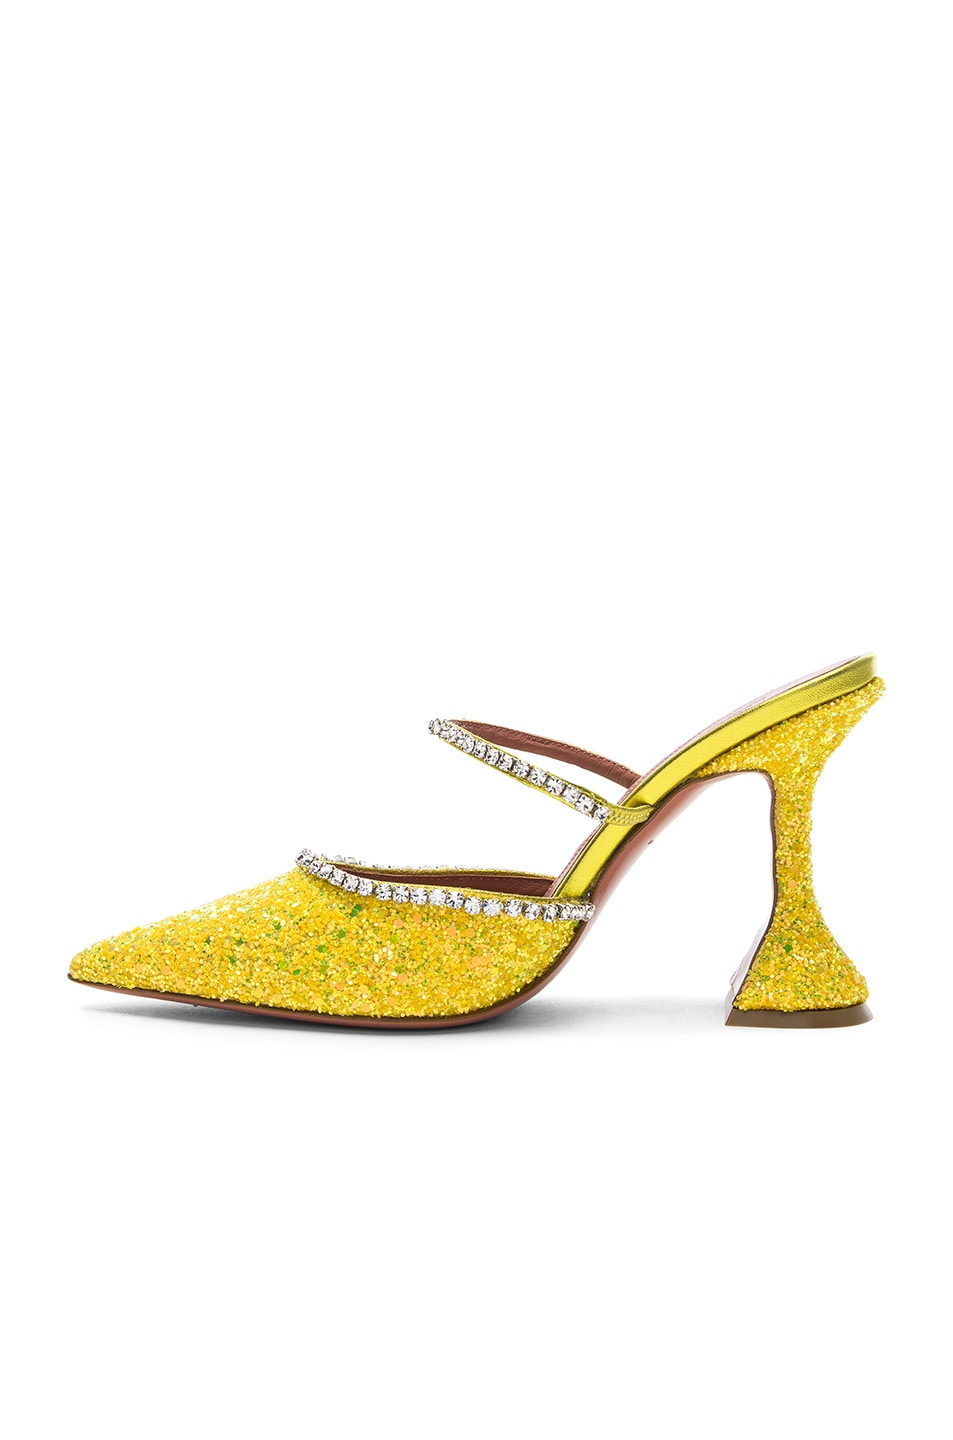 AMINA MUADDI Glitter Gilda Mules in Yellow & Crystals | FWRD